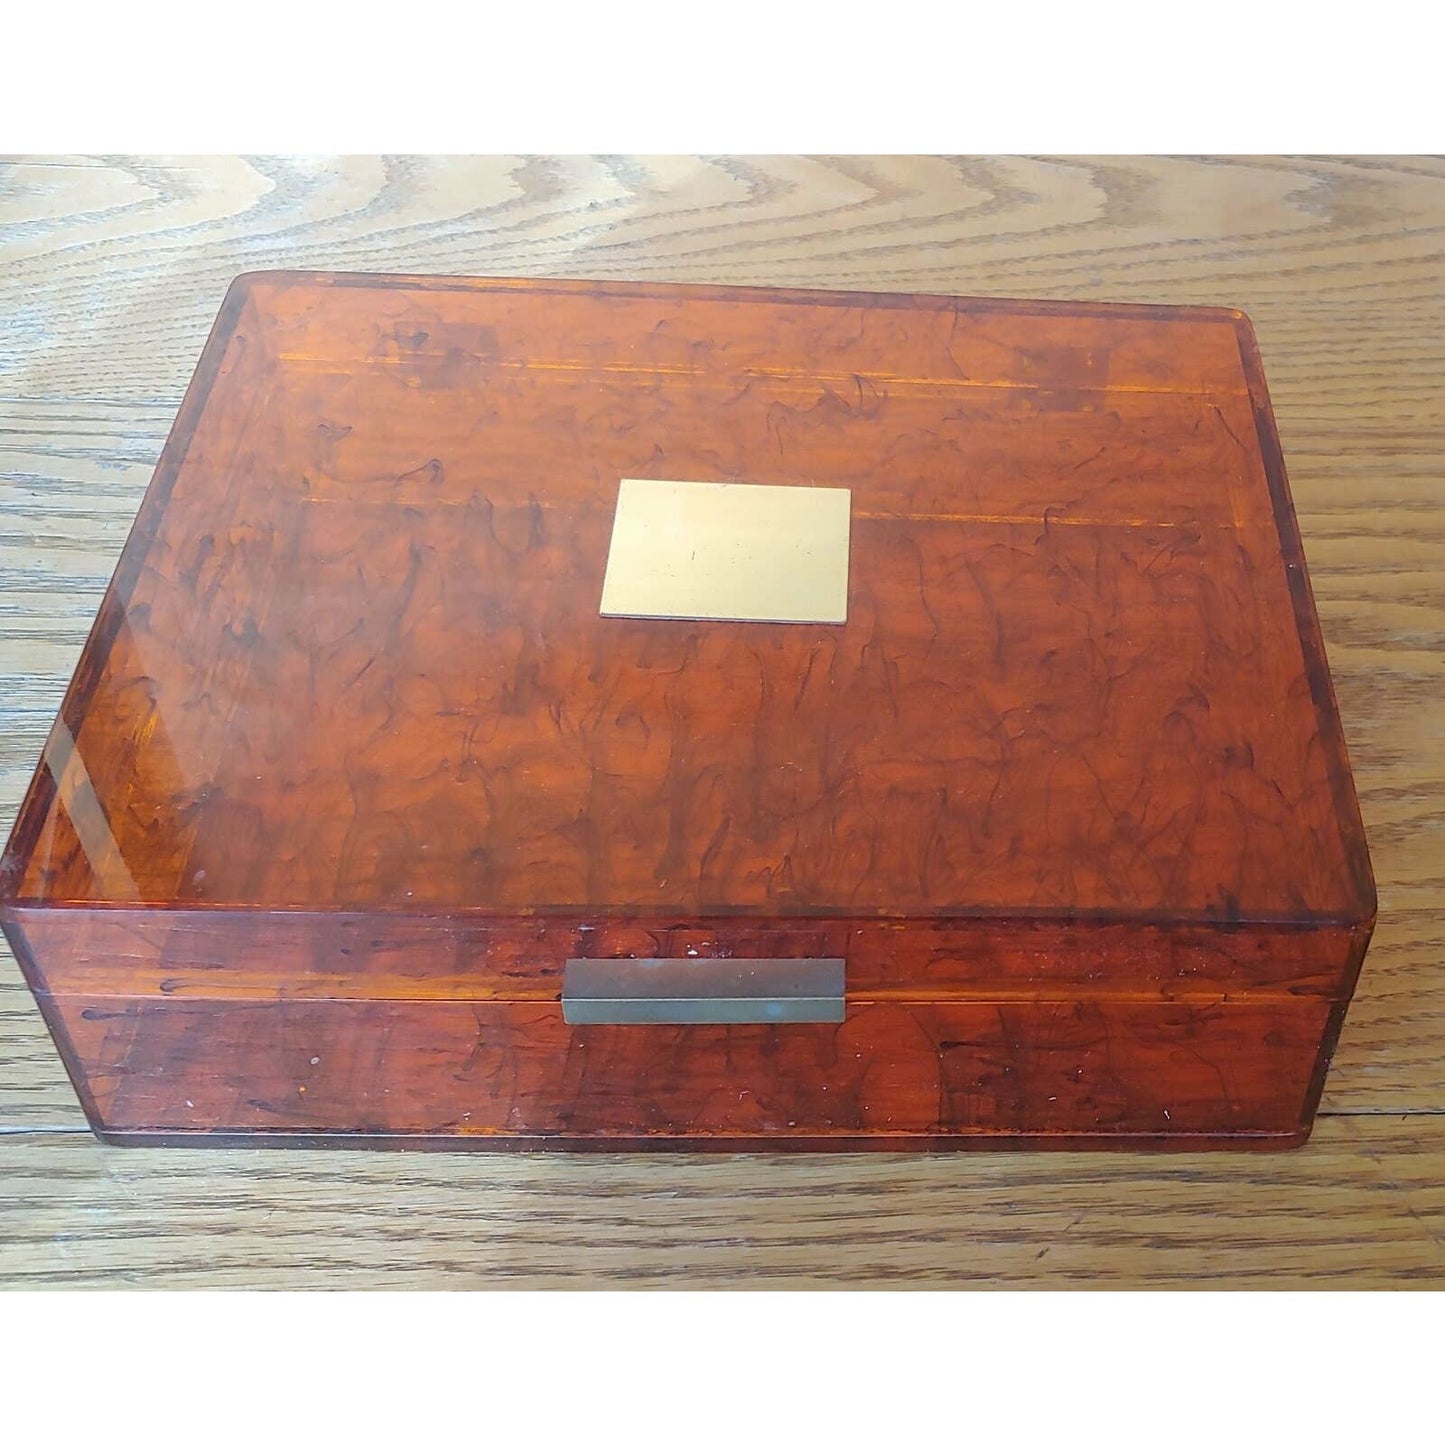 Boxed-in! Humidor Stylish Little Acrylic box 70's Burled Finish Free Shipping!